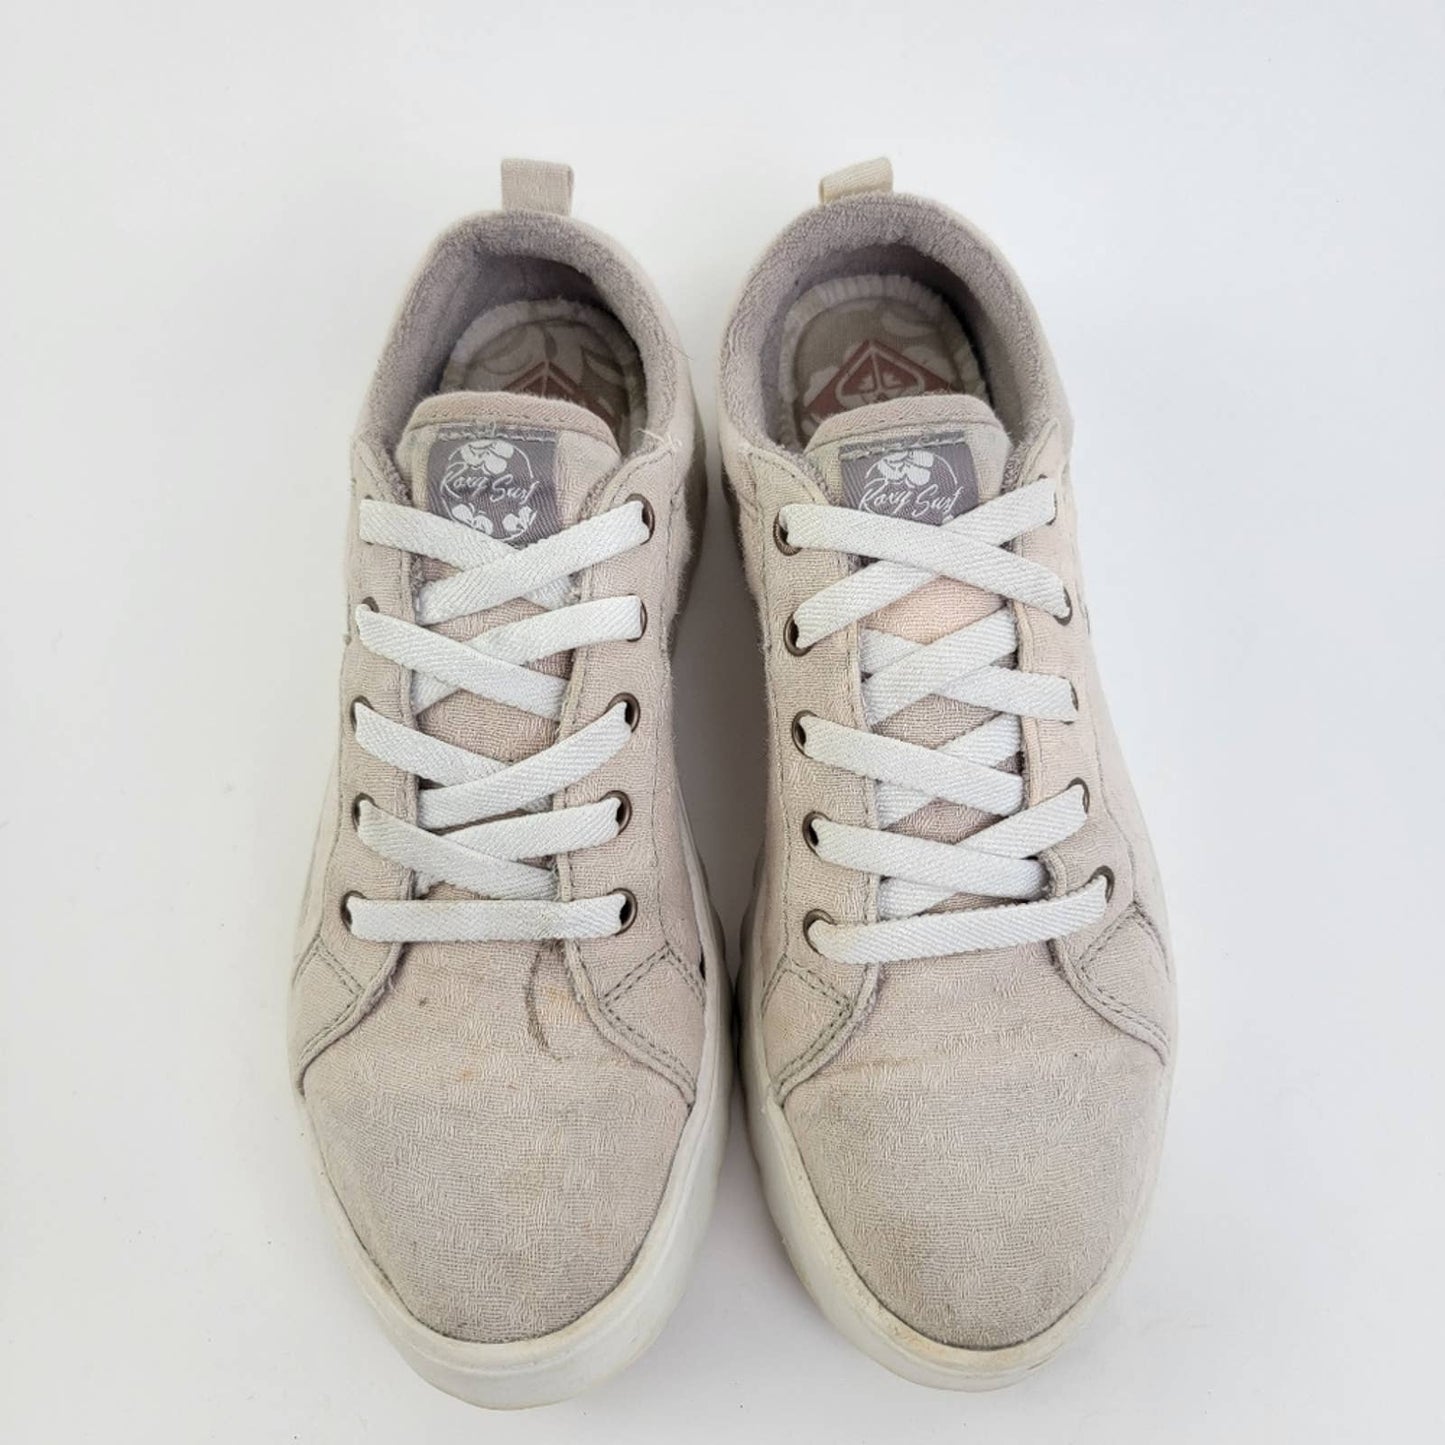 Roxy Sheilahh Platform Sneakers - 7.5